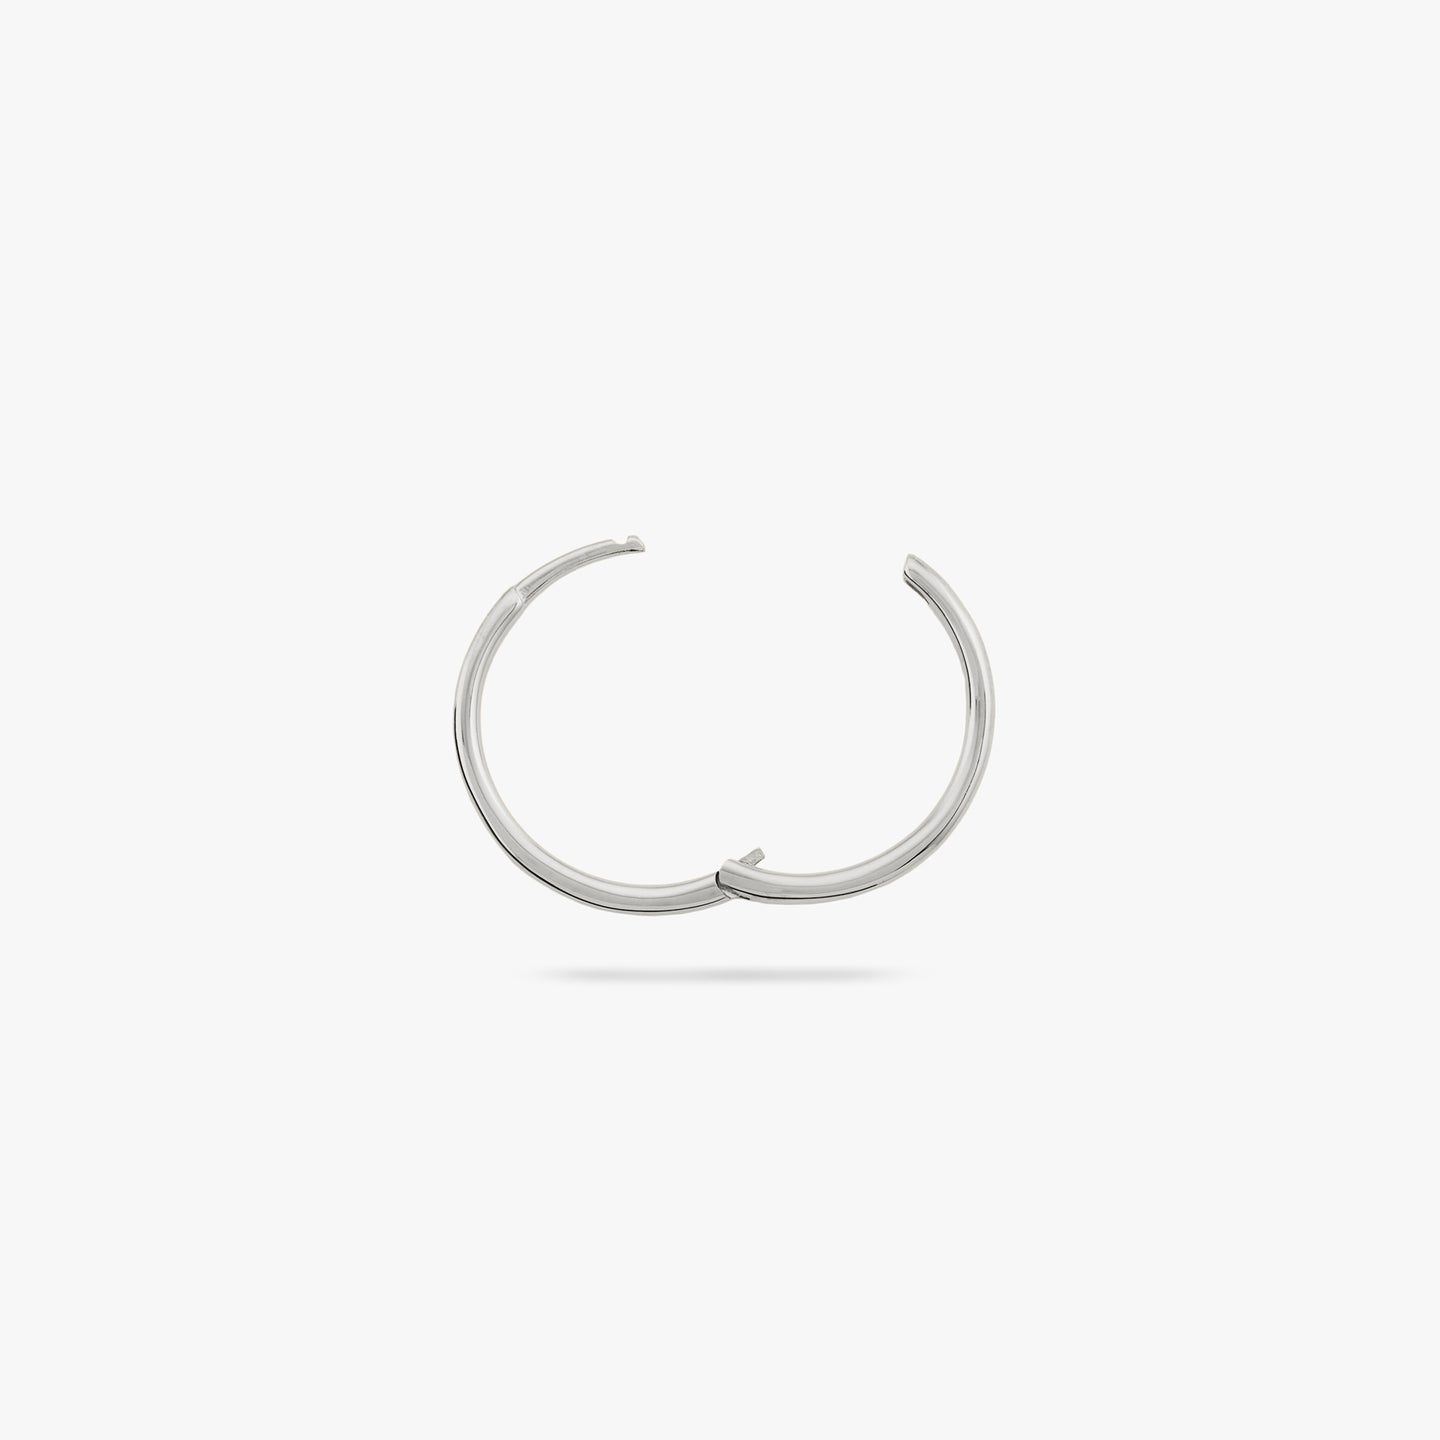 Medium sized slim simple silver hoop. color:null|silver